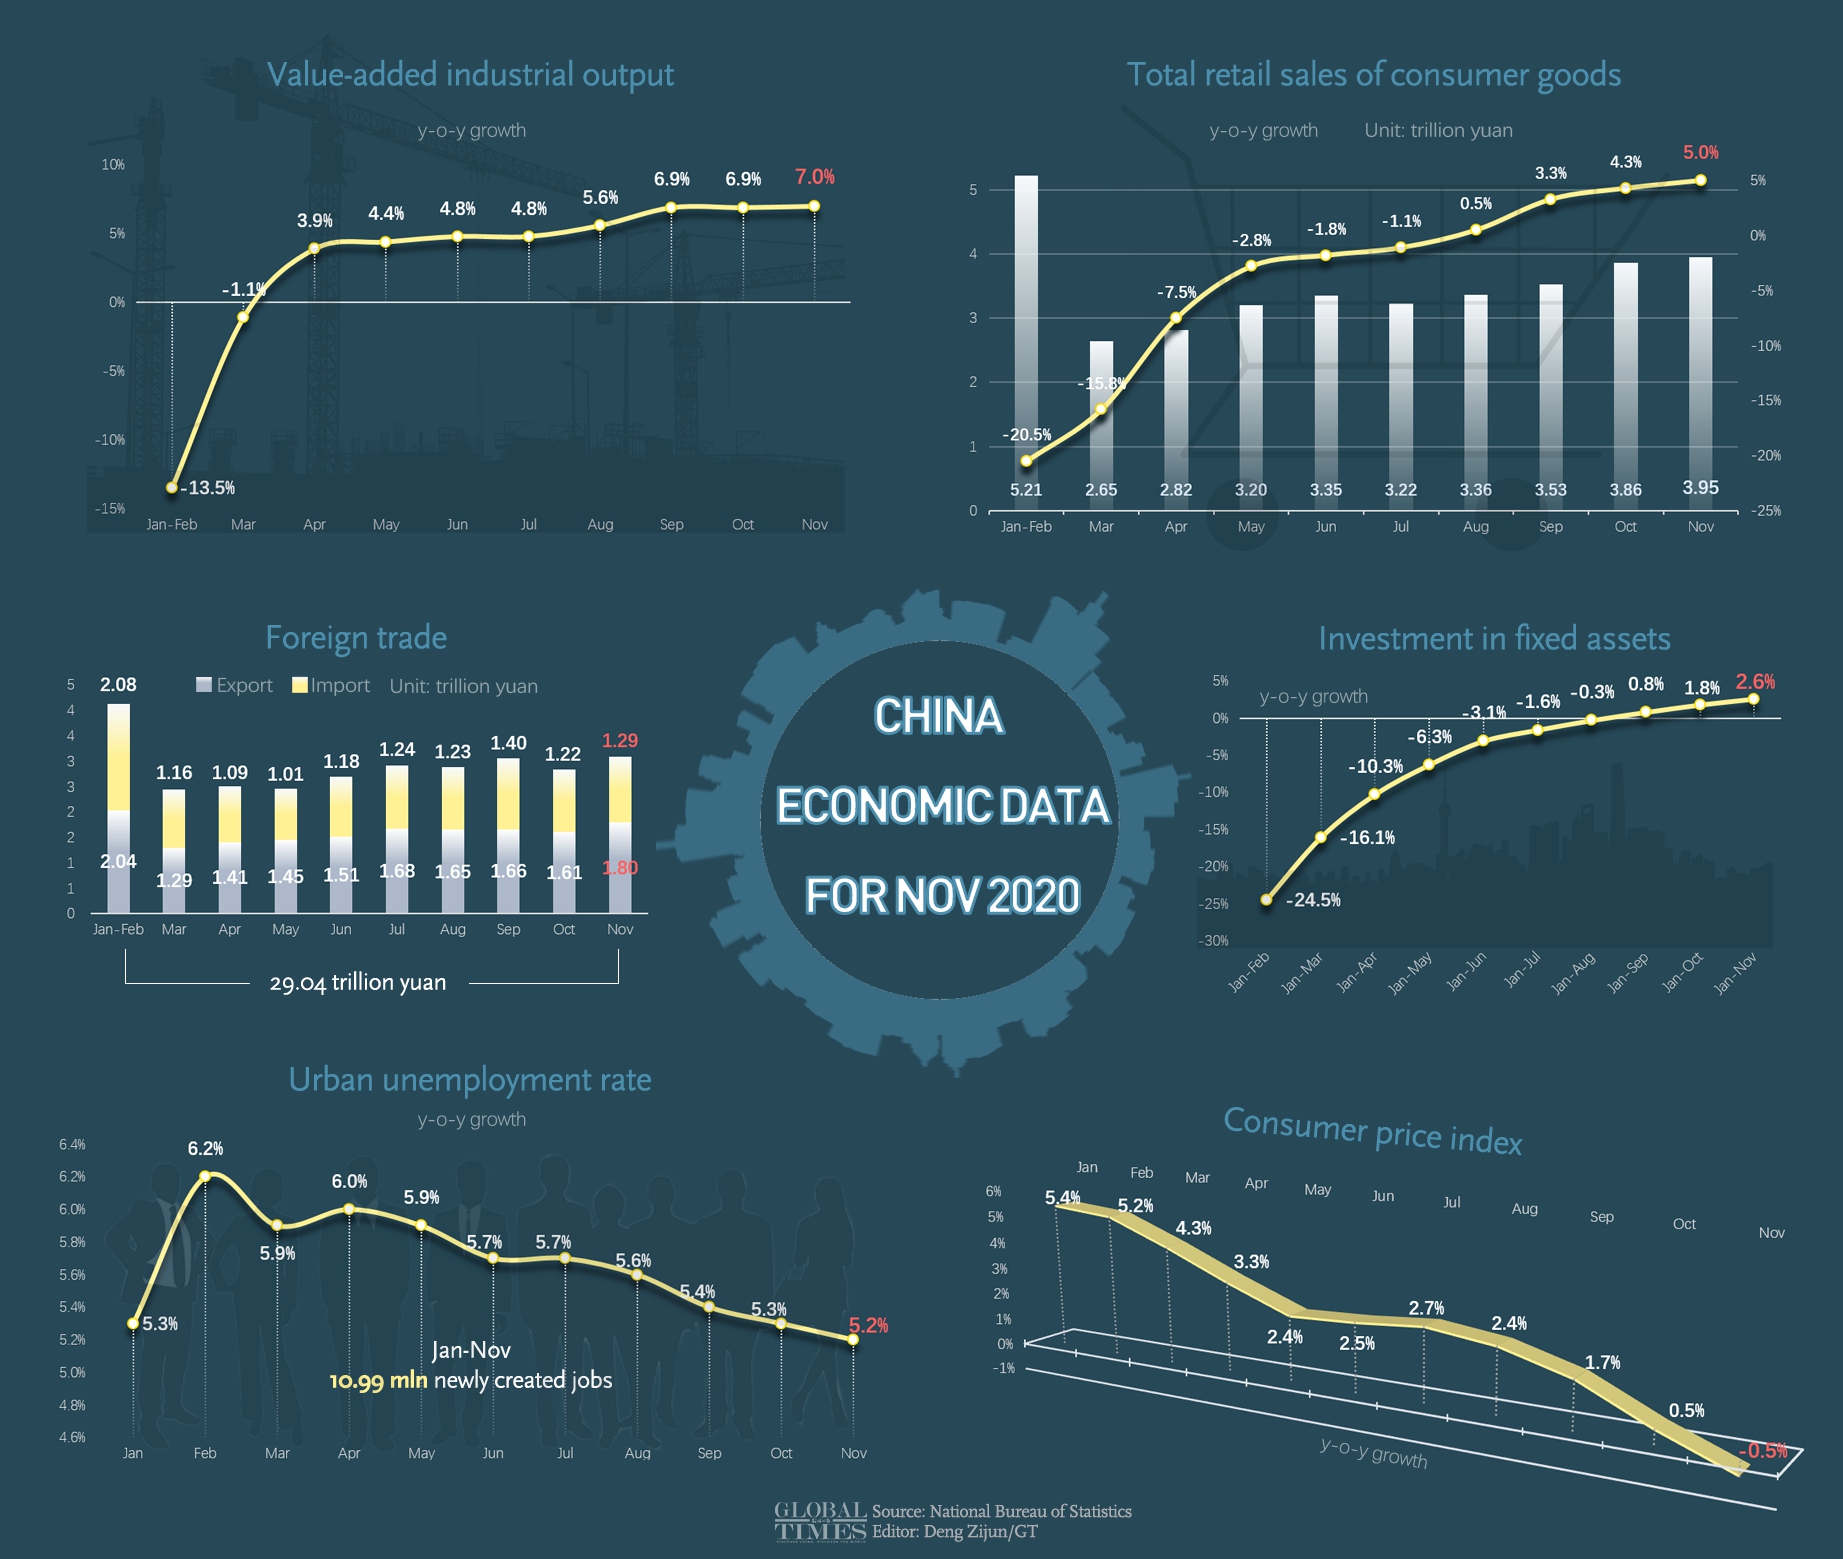 China economic data for Nov 2020 Global Times